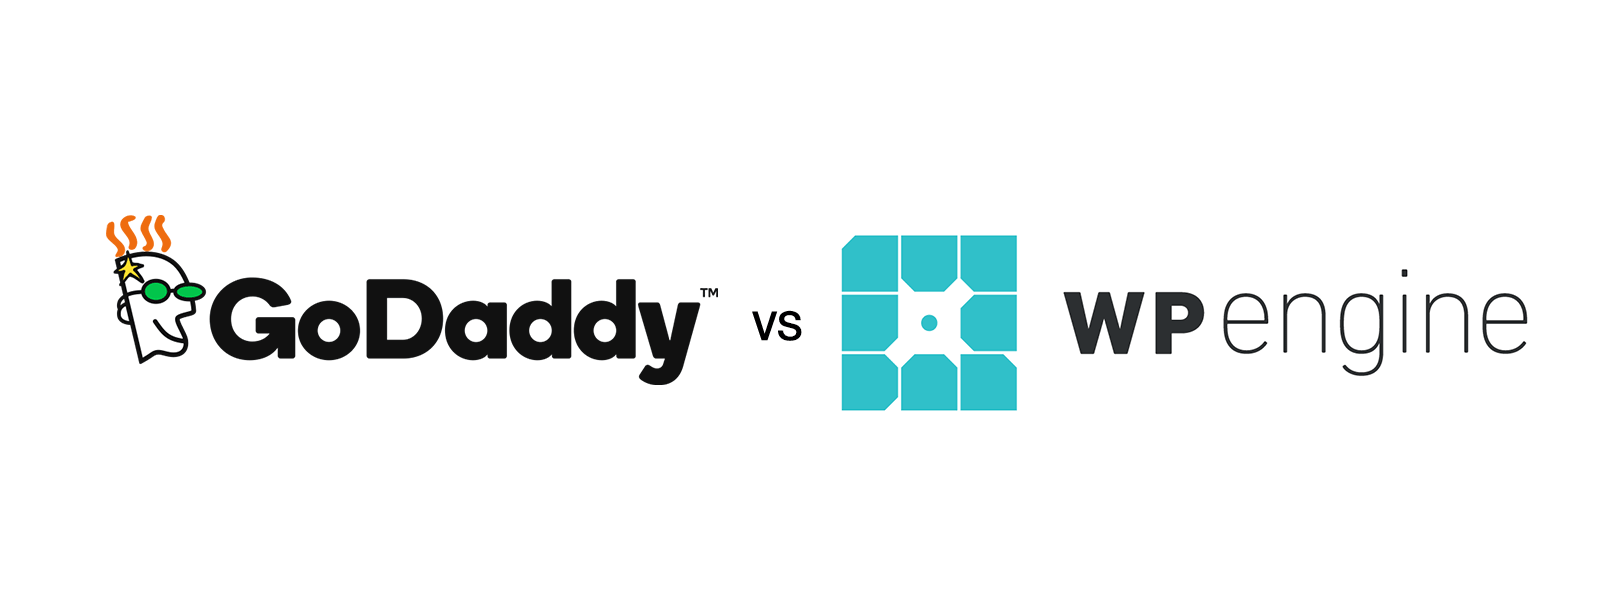 GoDaddy vs WP Engine for WordPress - Compared